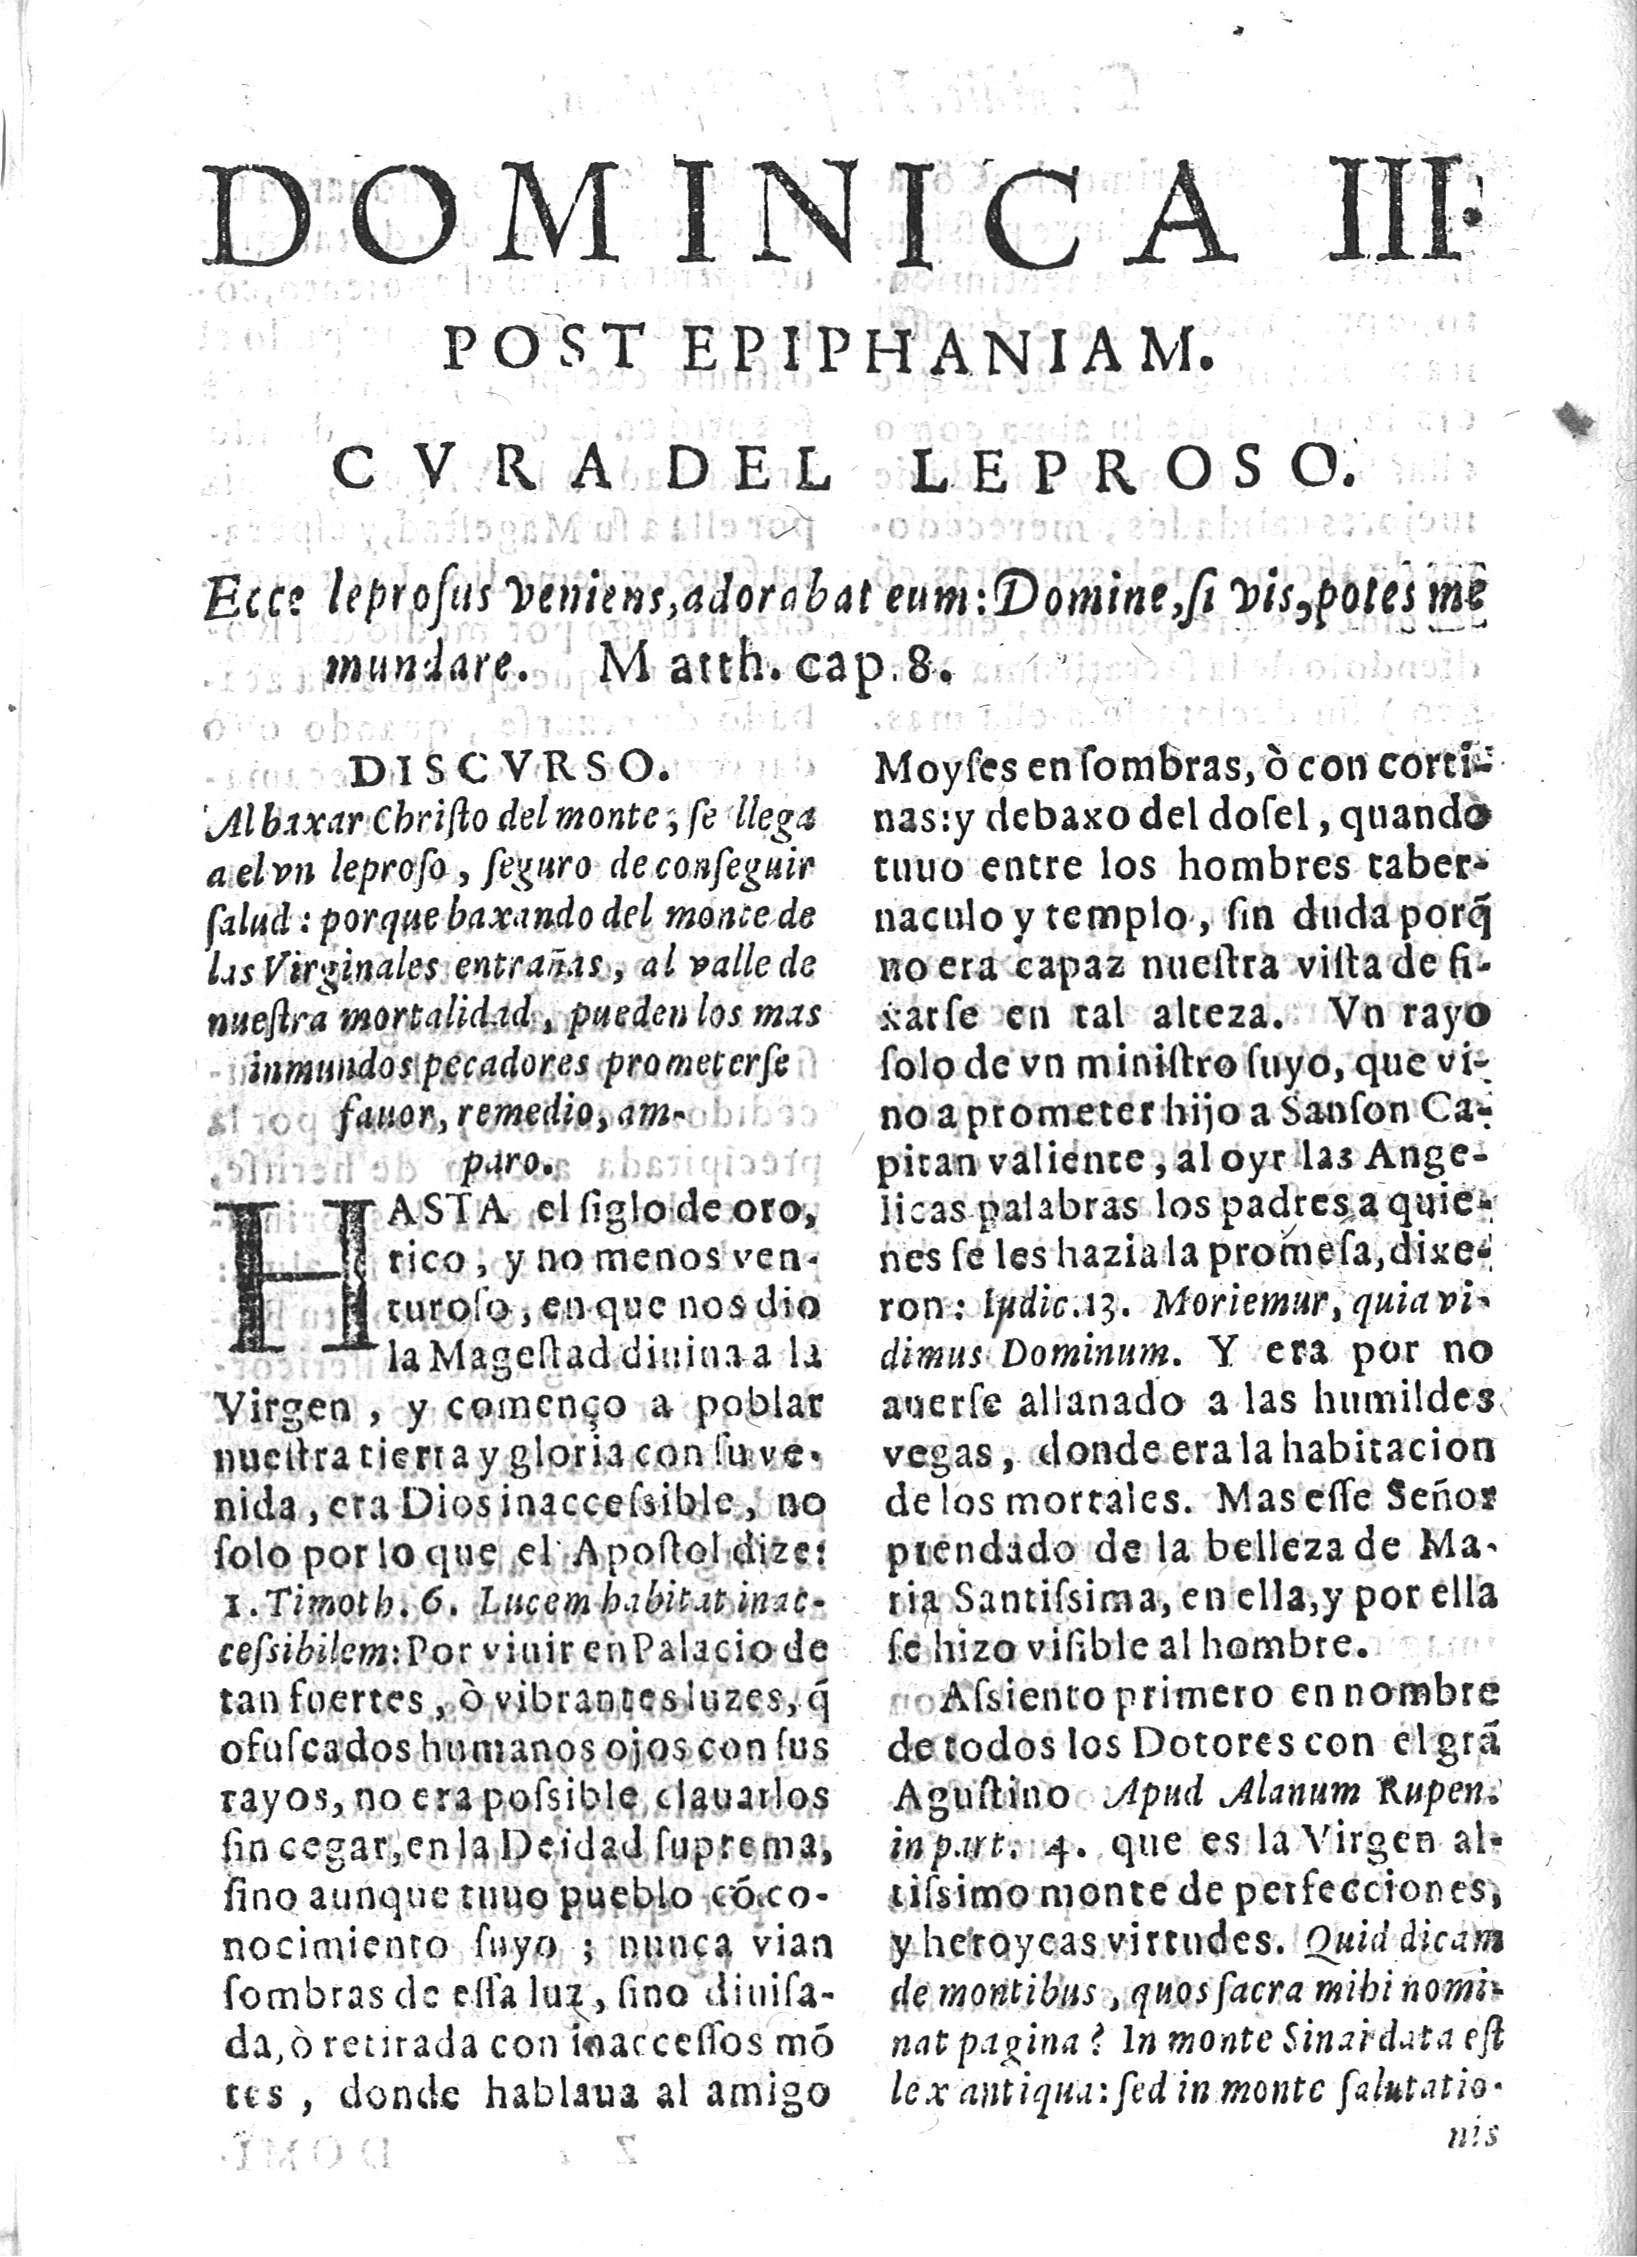 Dominica III post Epiphaniam. Cvra del leproso